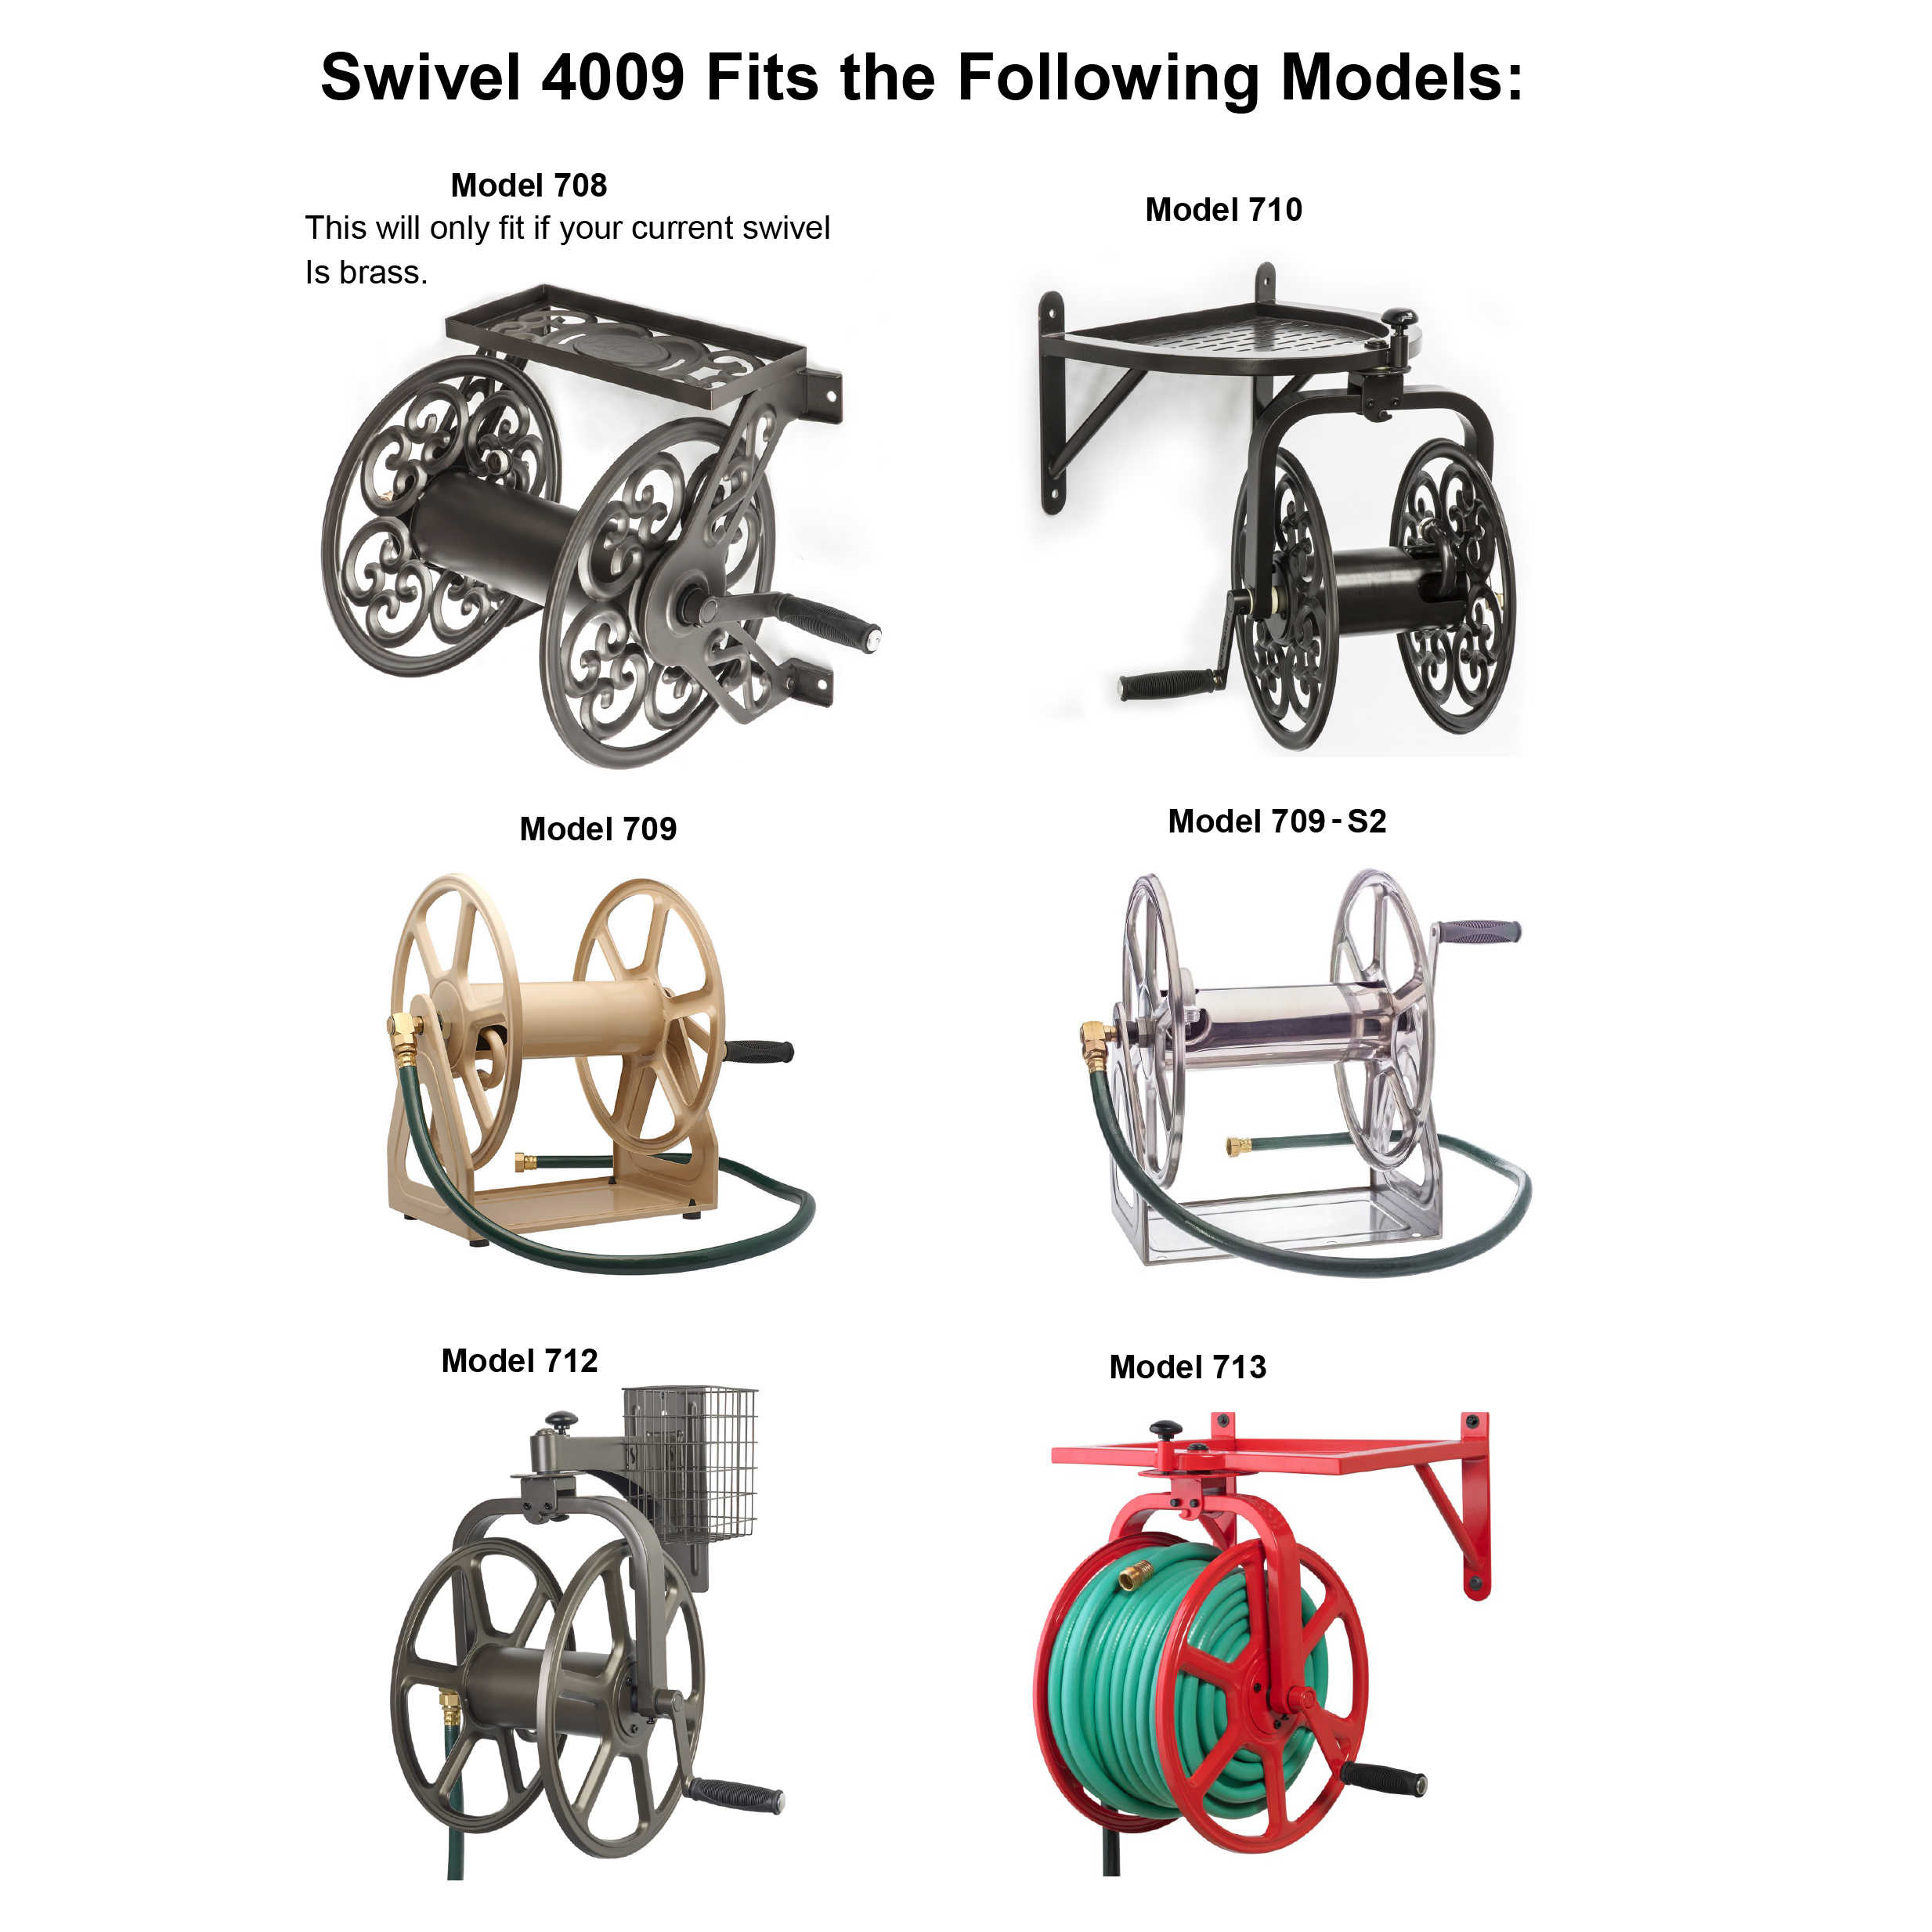 4009 Swivel fits Models 708, 709, 709-S2, 710, 712, and 713